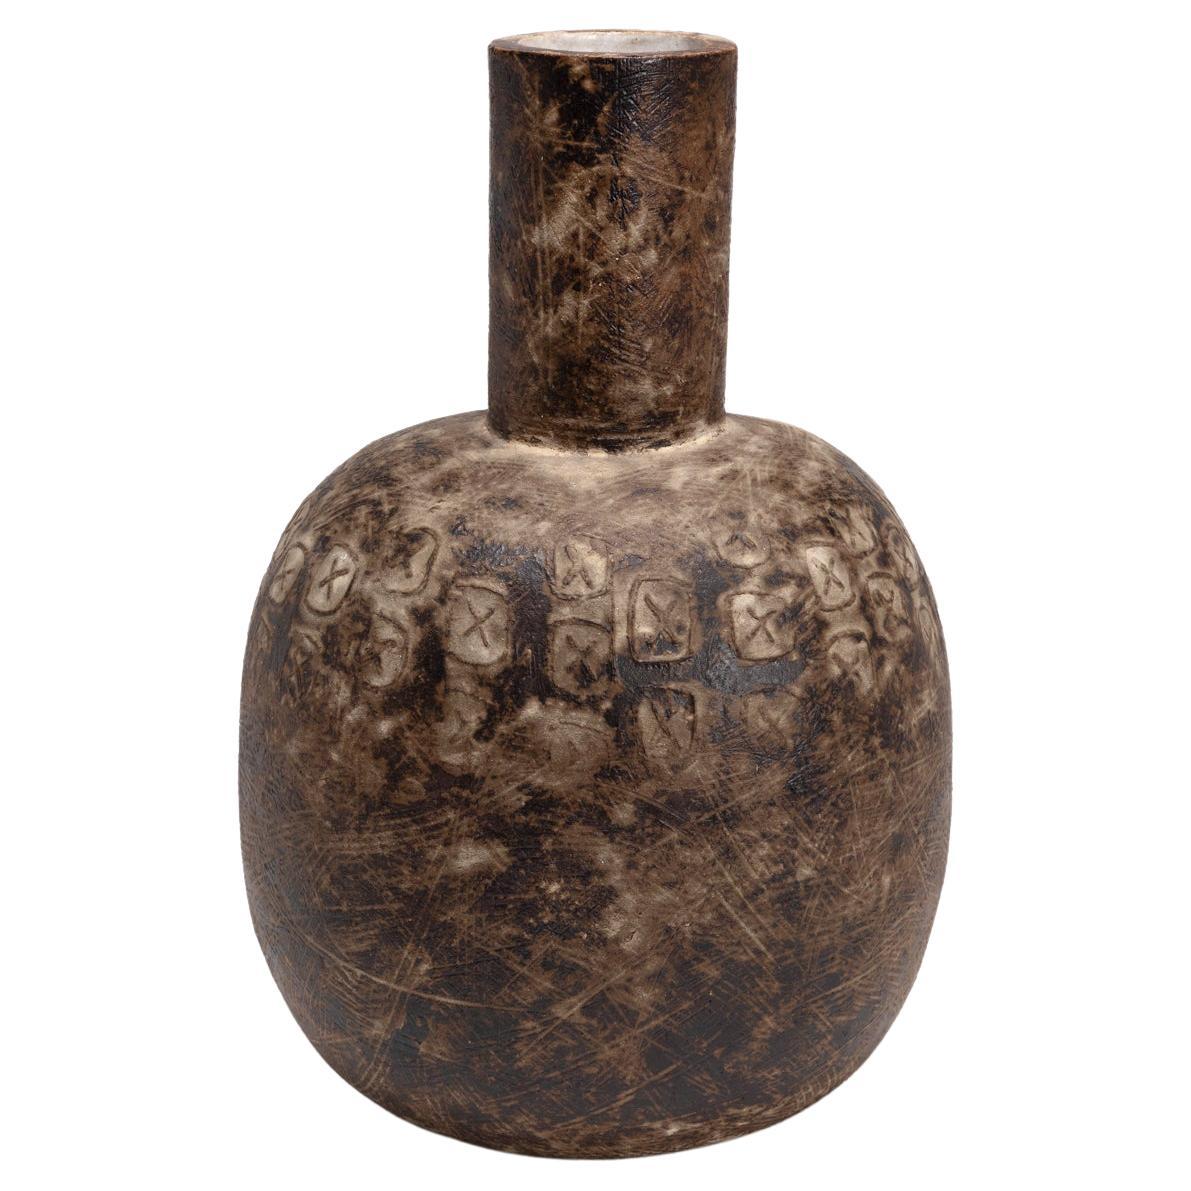 Claude Conover Ceramic Stoneware Vessel Signed "Comitan" Inscribed Decorations For Sale